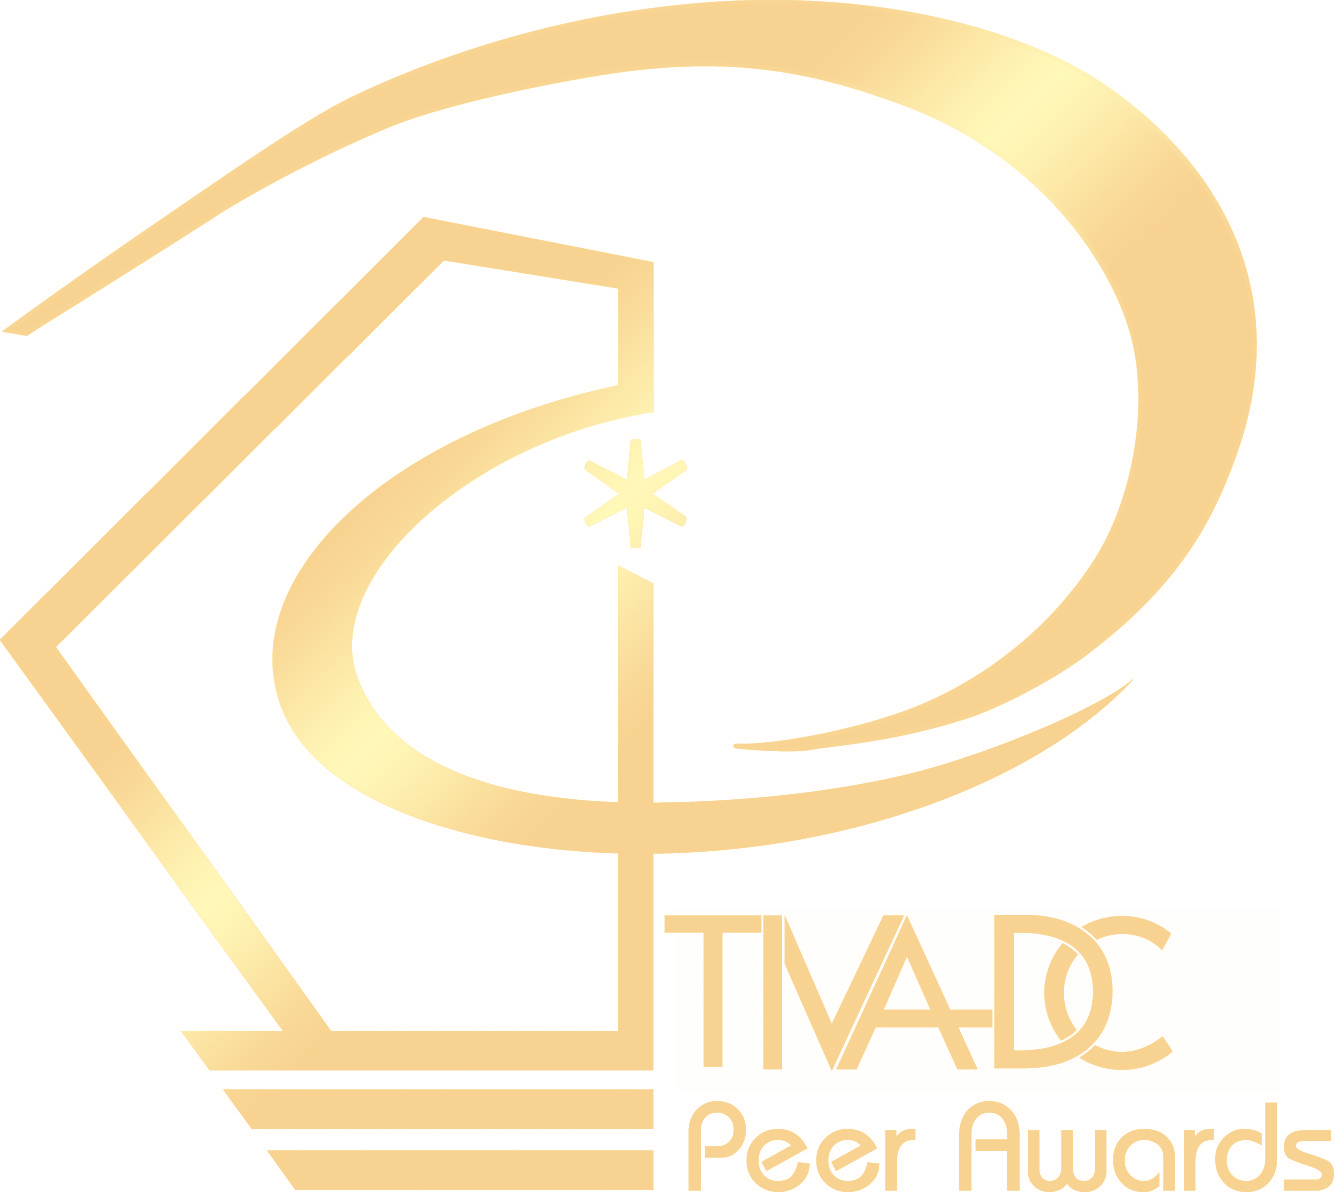 TIVA Peer Awards